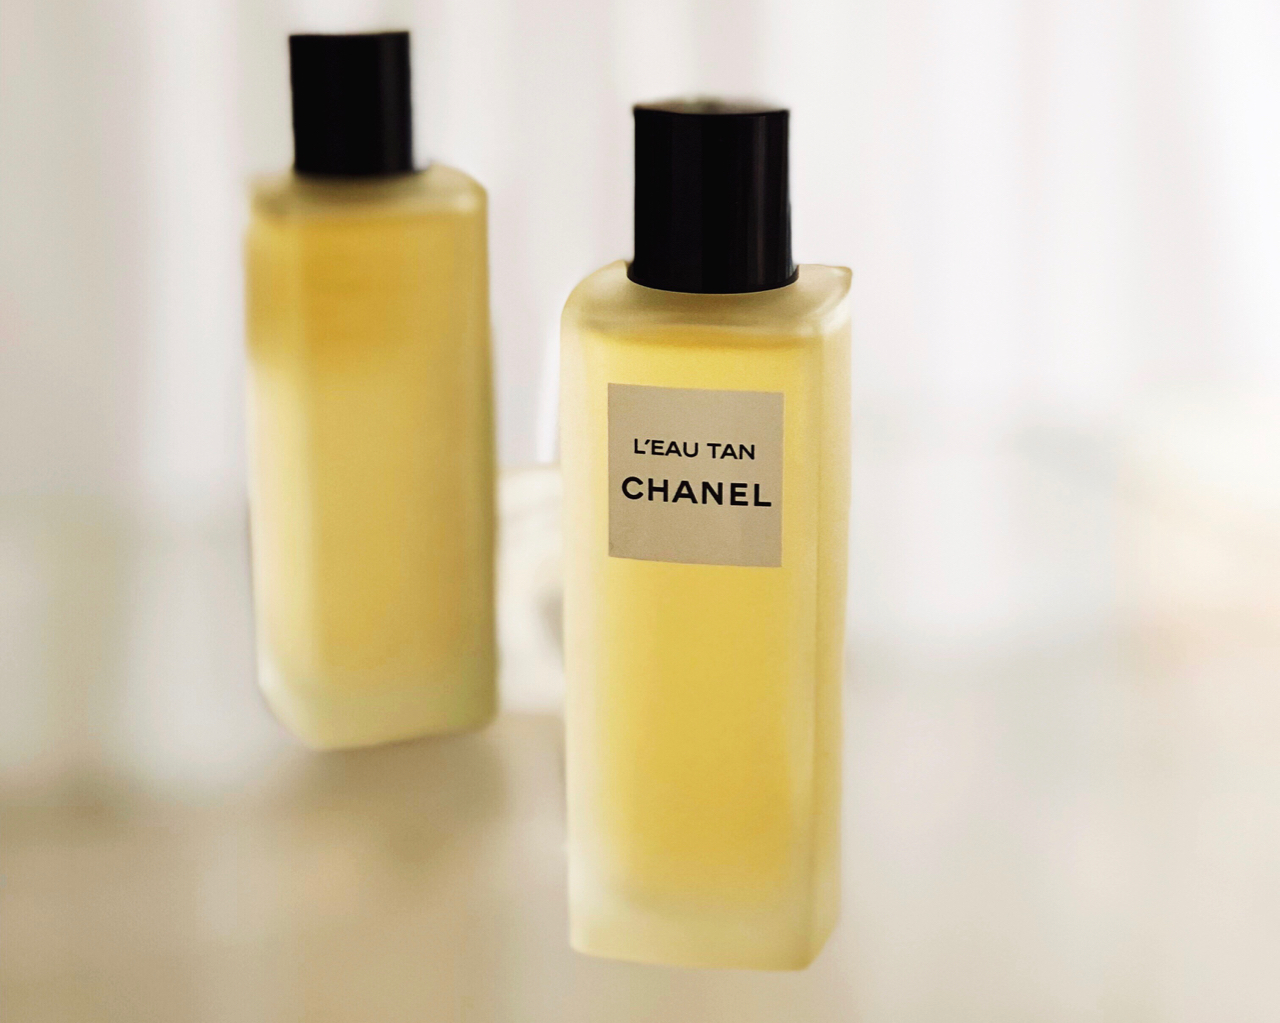 Chanel Le Blanc De Chanel Illuminating Base Review